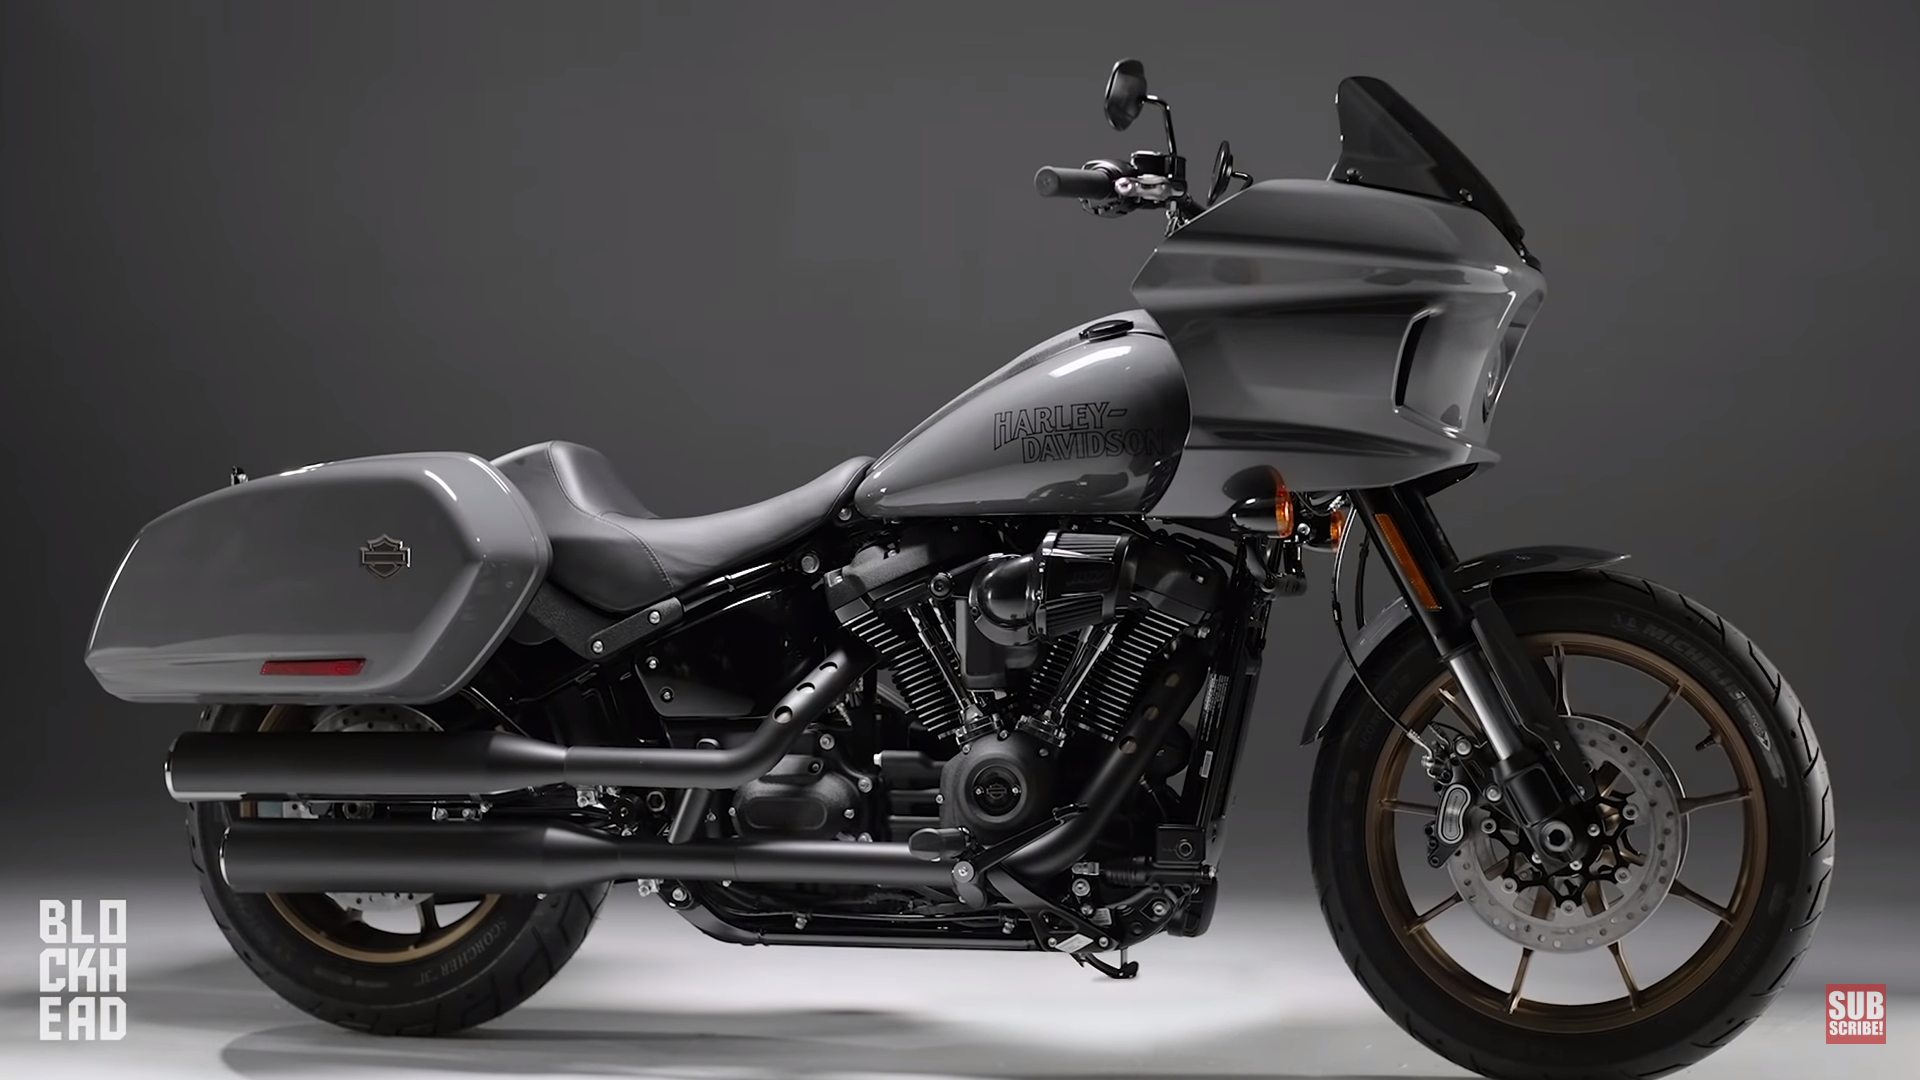 2022 Harley-Davidson Low Rider ST in gunship grey